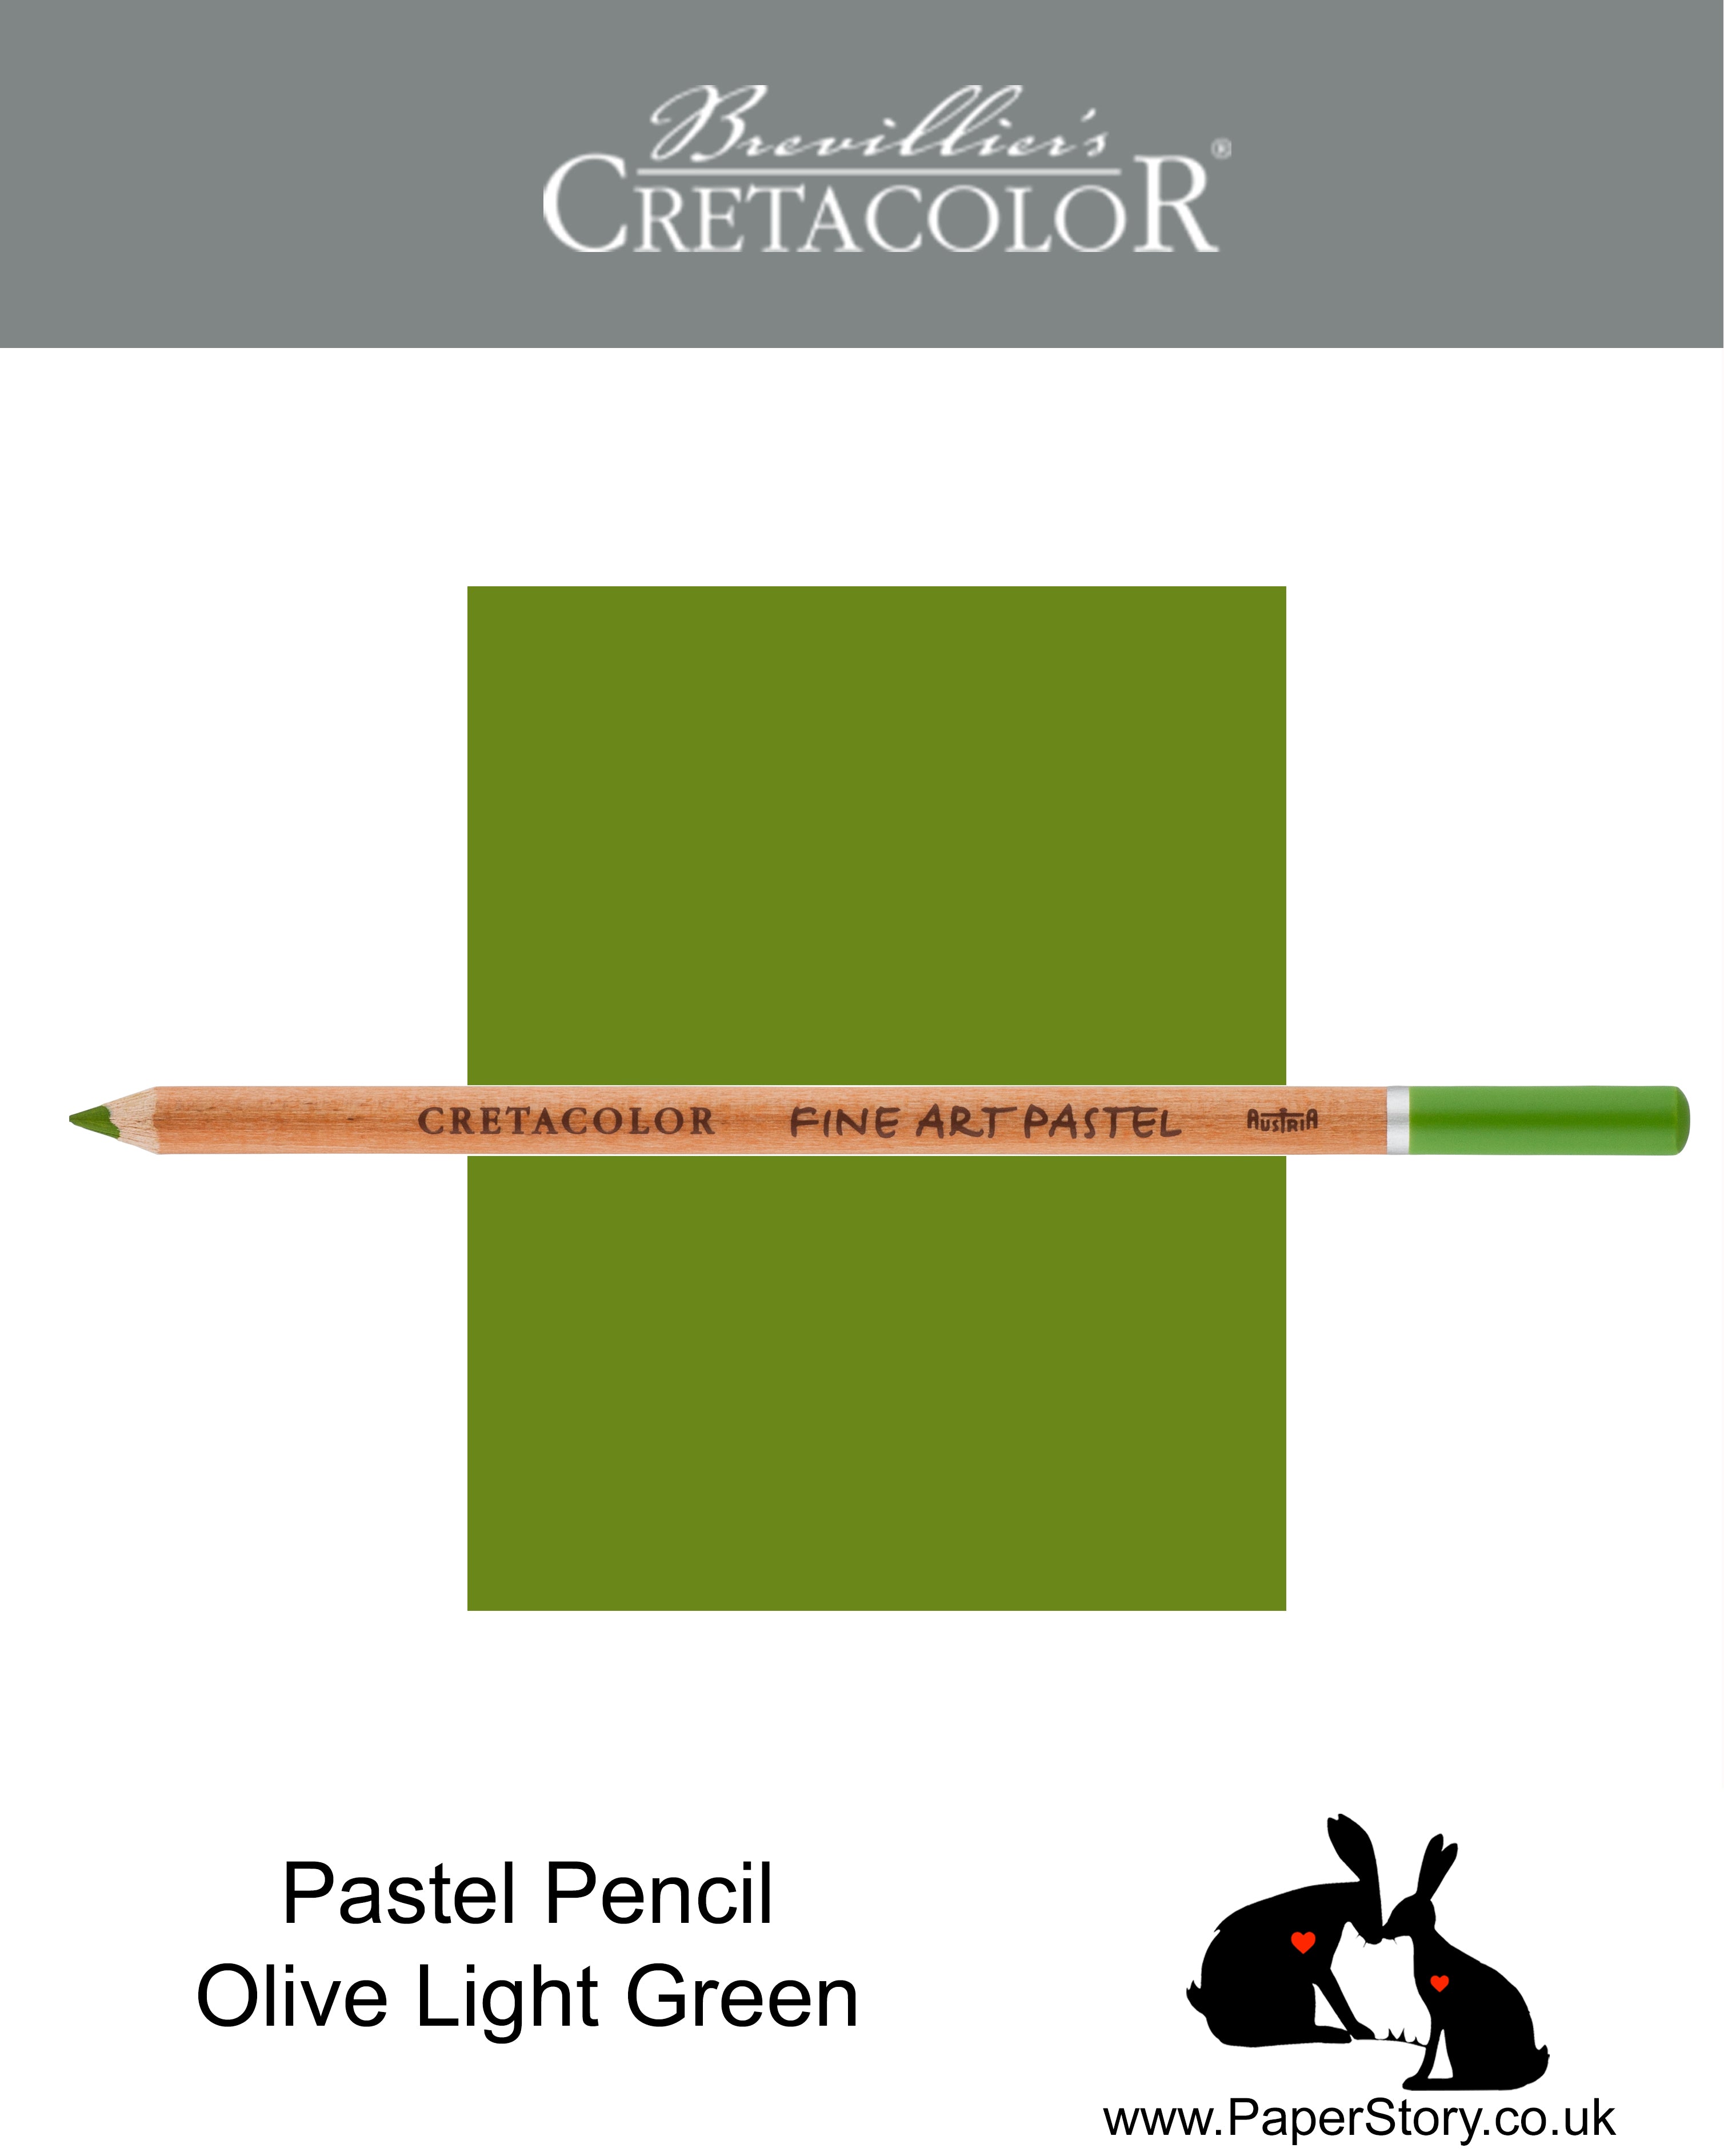 Cretacolor 471 88 Artists Pastel Pencil Olive Light Green